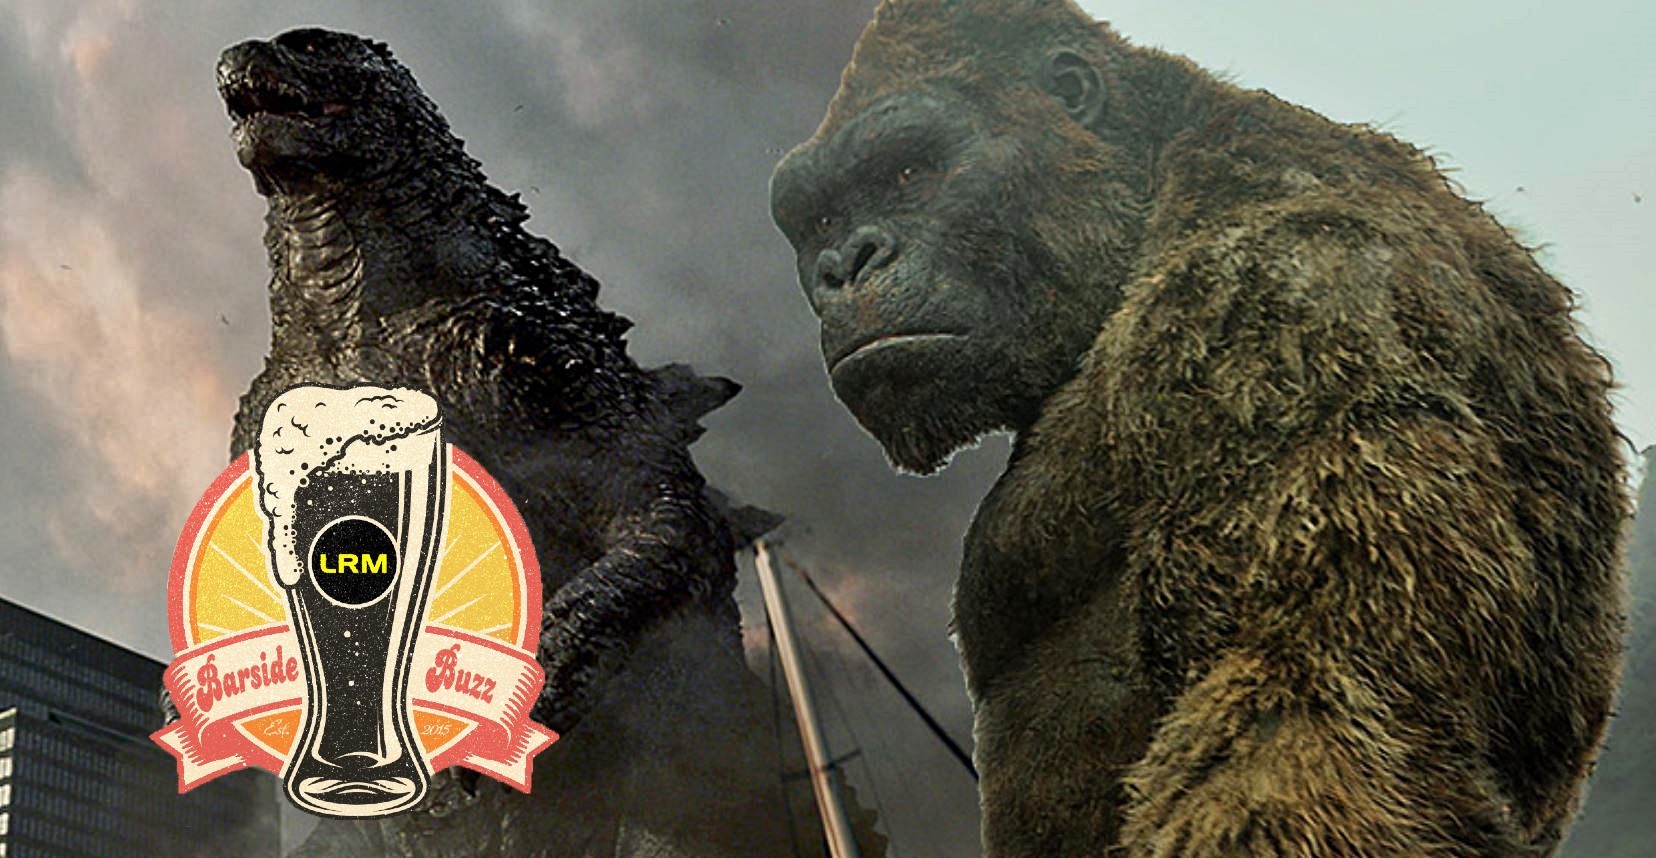 The Godzilla and Kong rumored villain is SpaceGodzilla